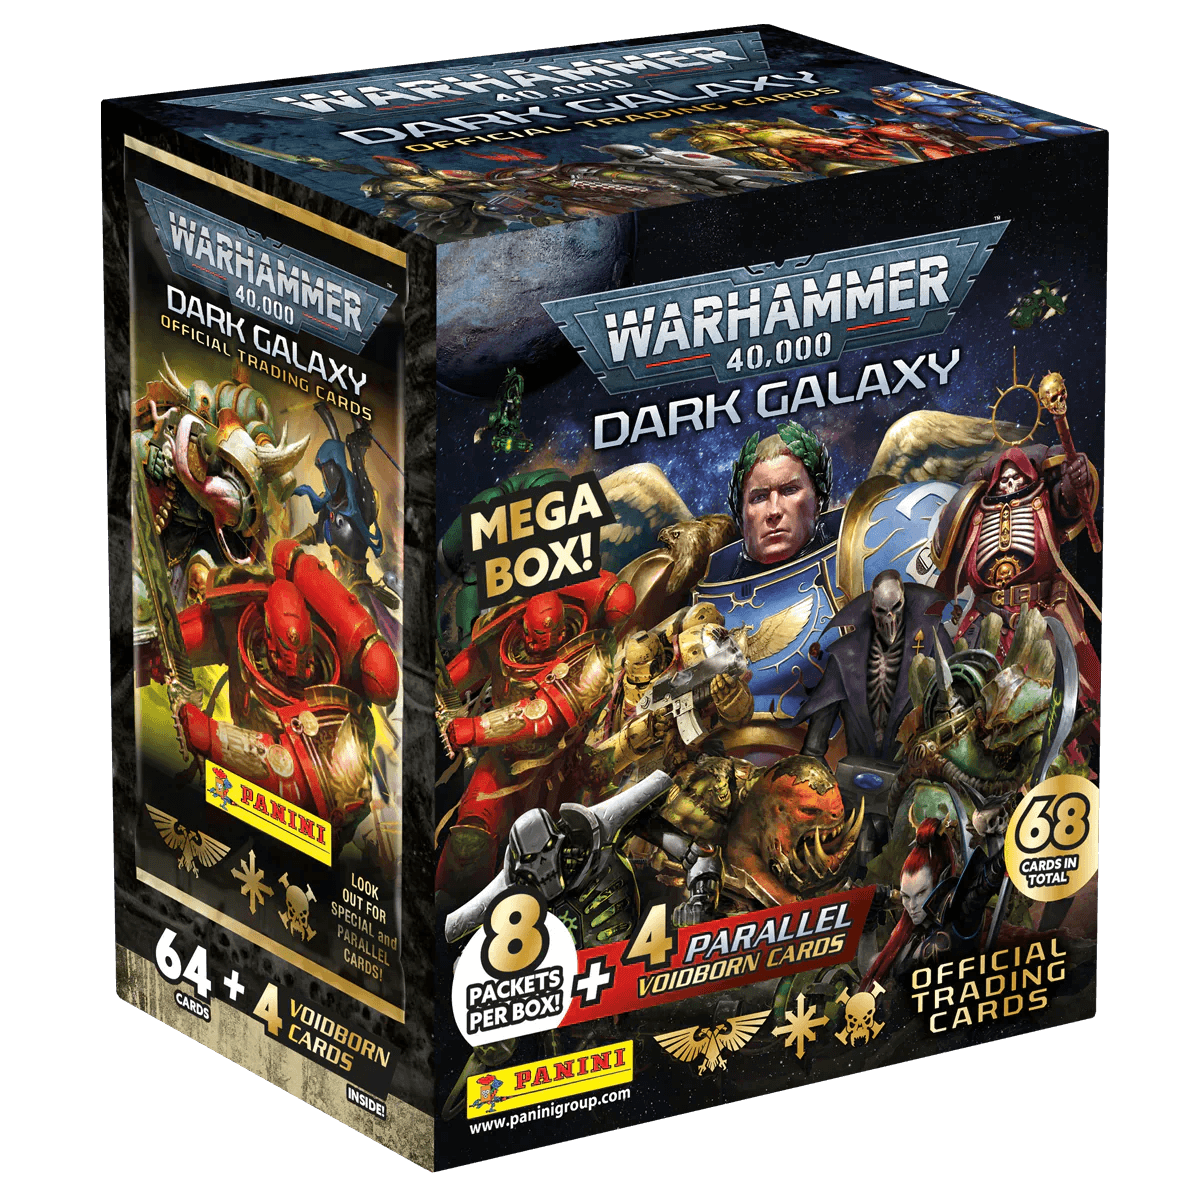 Warhammer Dark Galaxy Trading Card Collection - Mega Box - The Card Vault